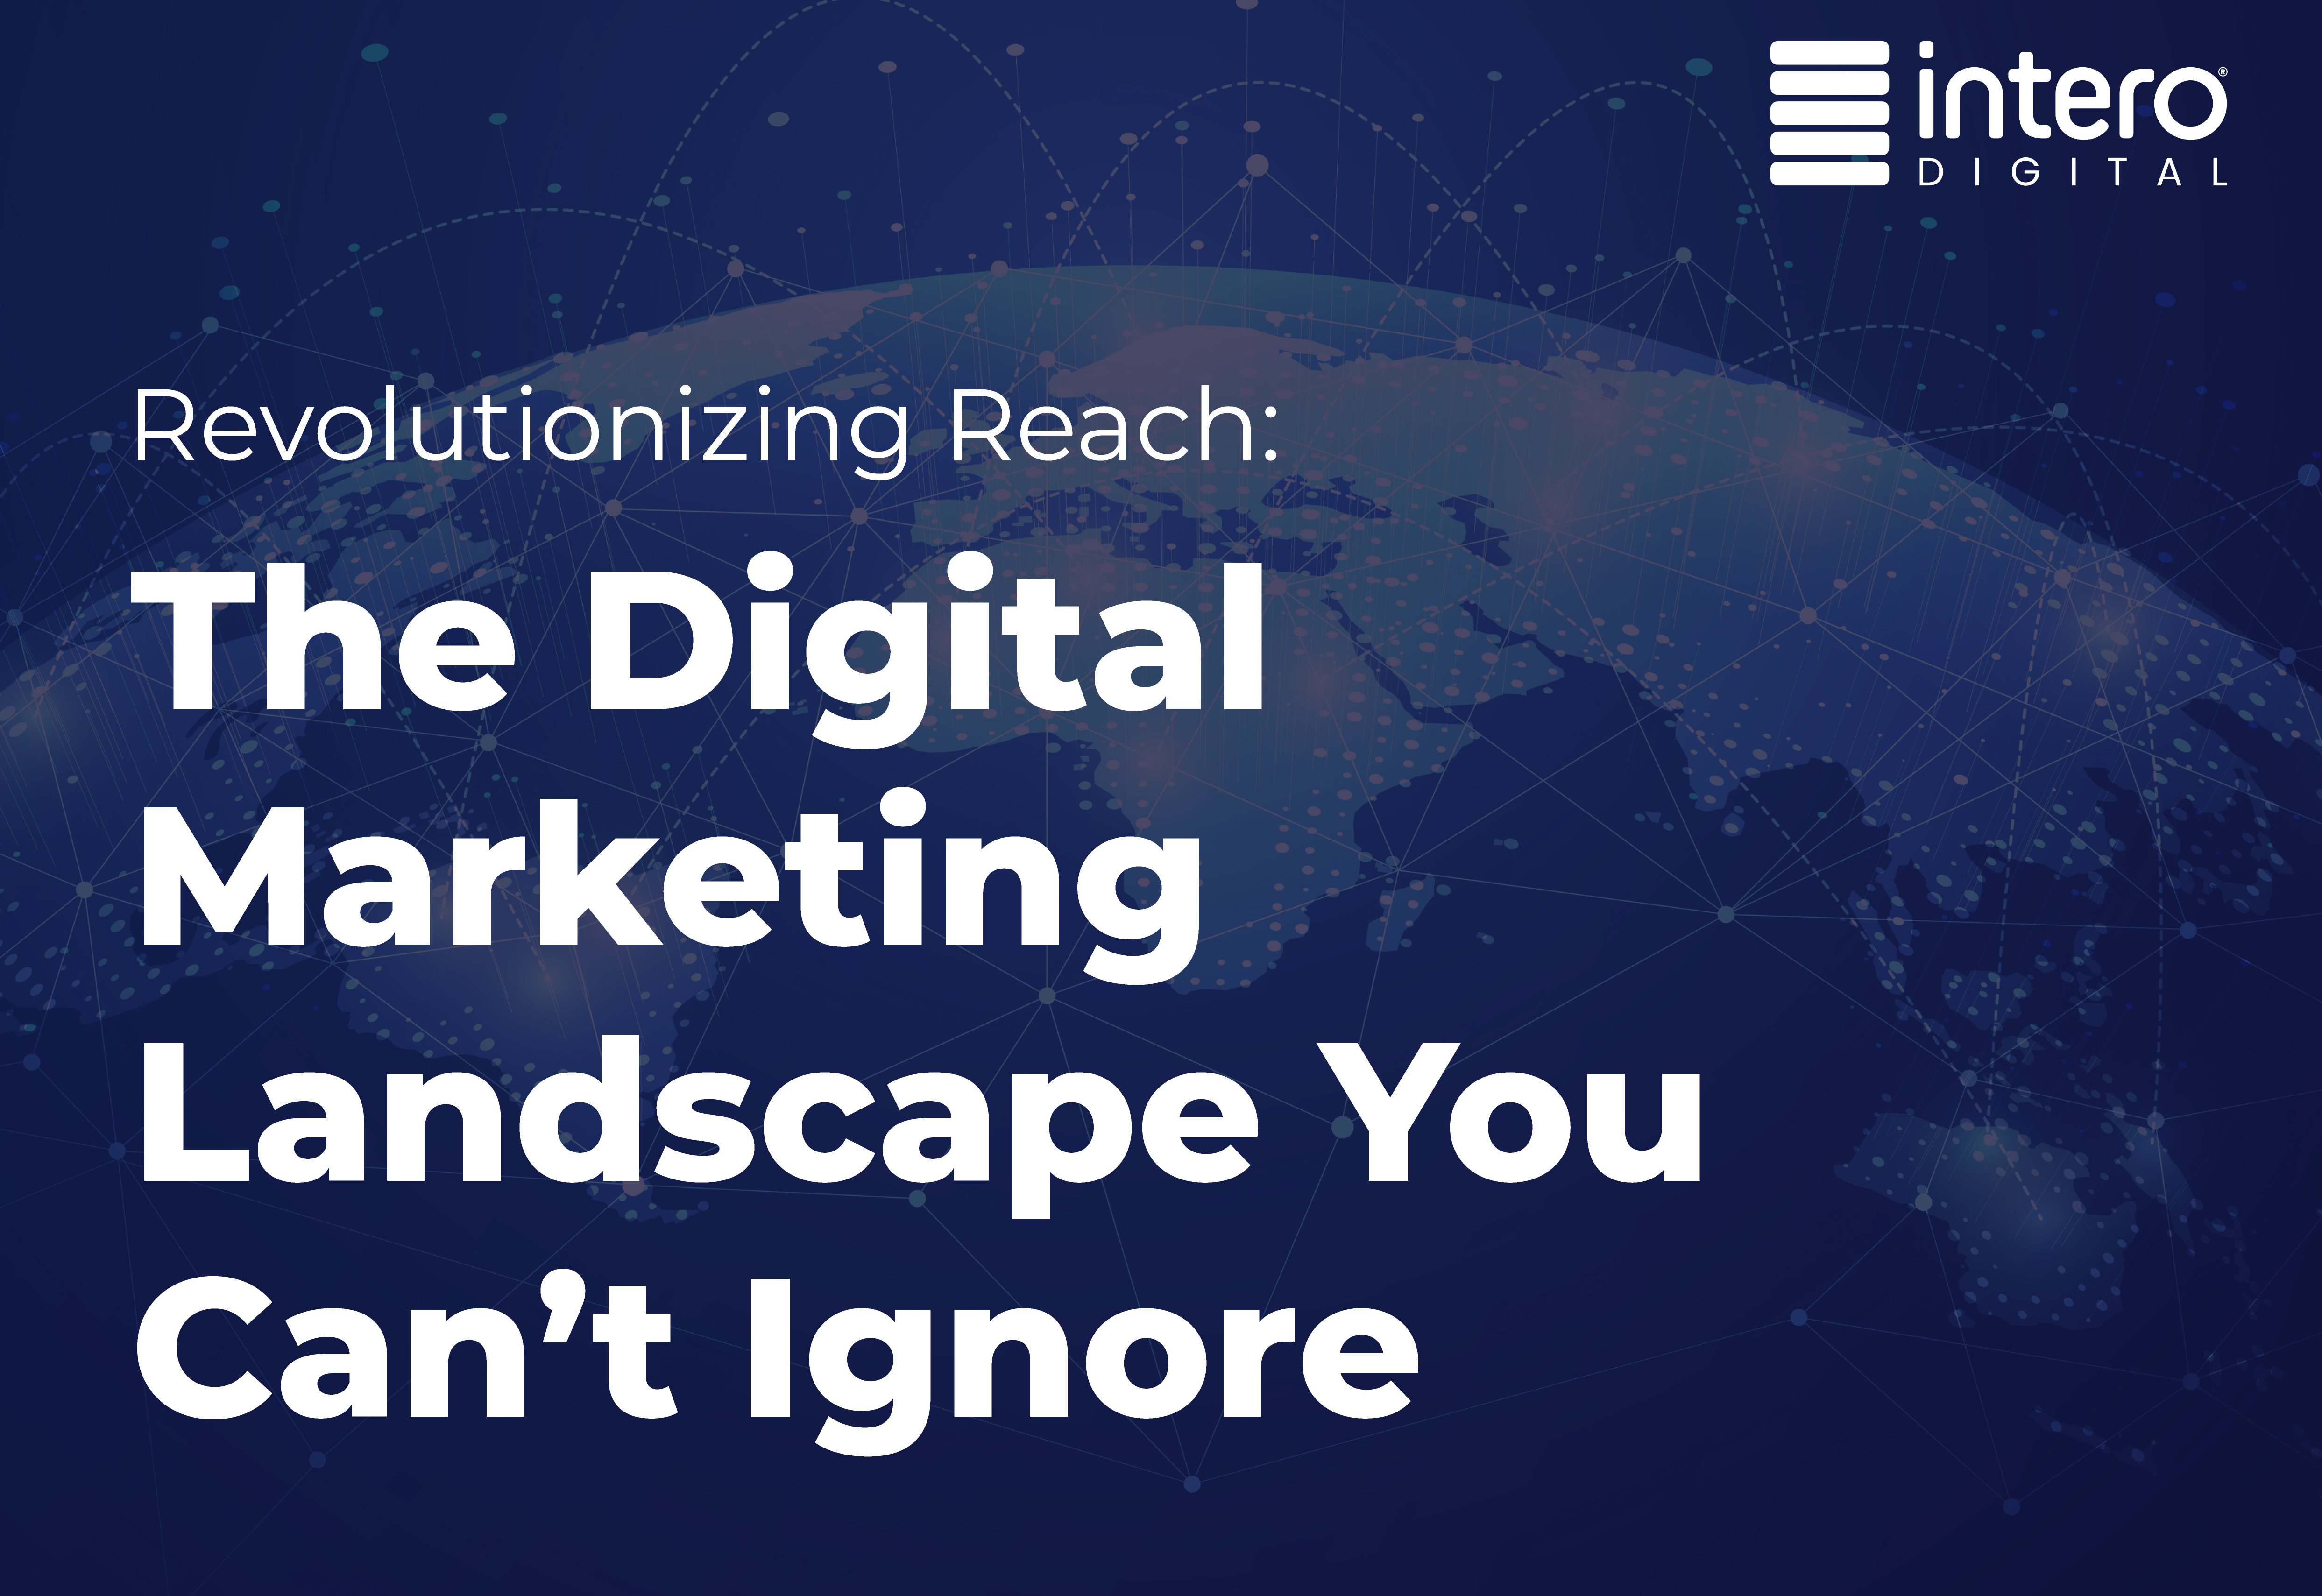 revolutionizing reach: the digital marketing landscape you can't ignore